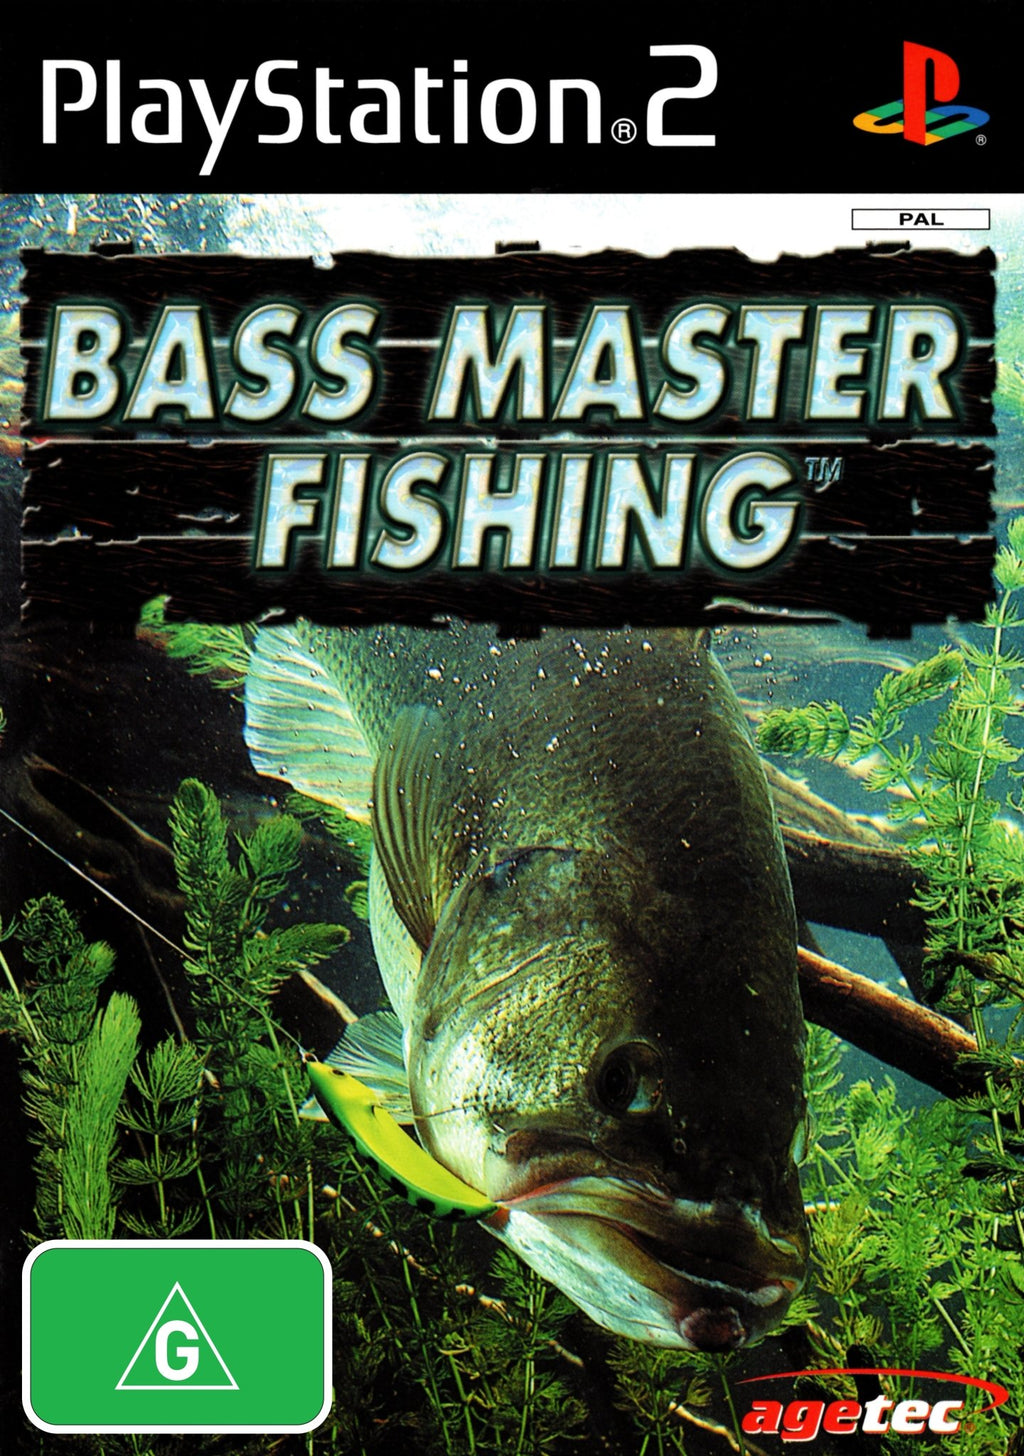 Bass Master Fishing - Super Retro - Playstation 2